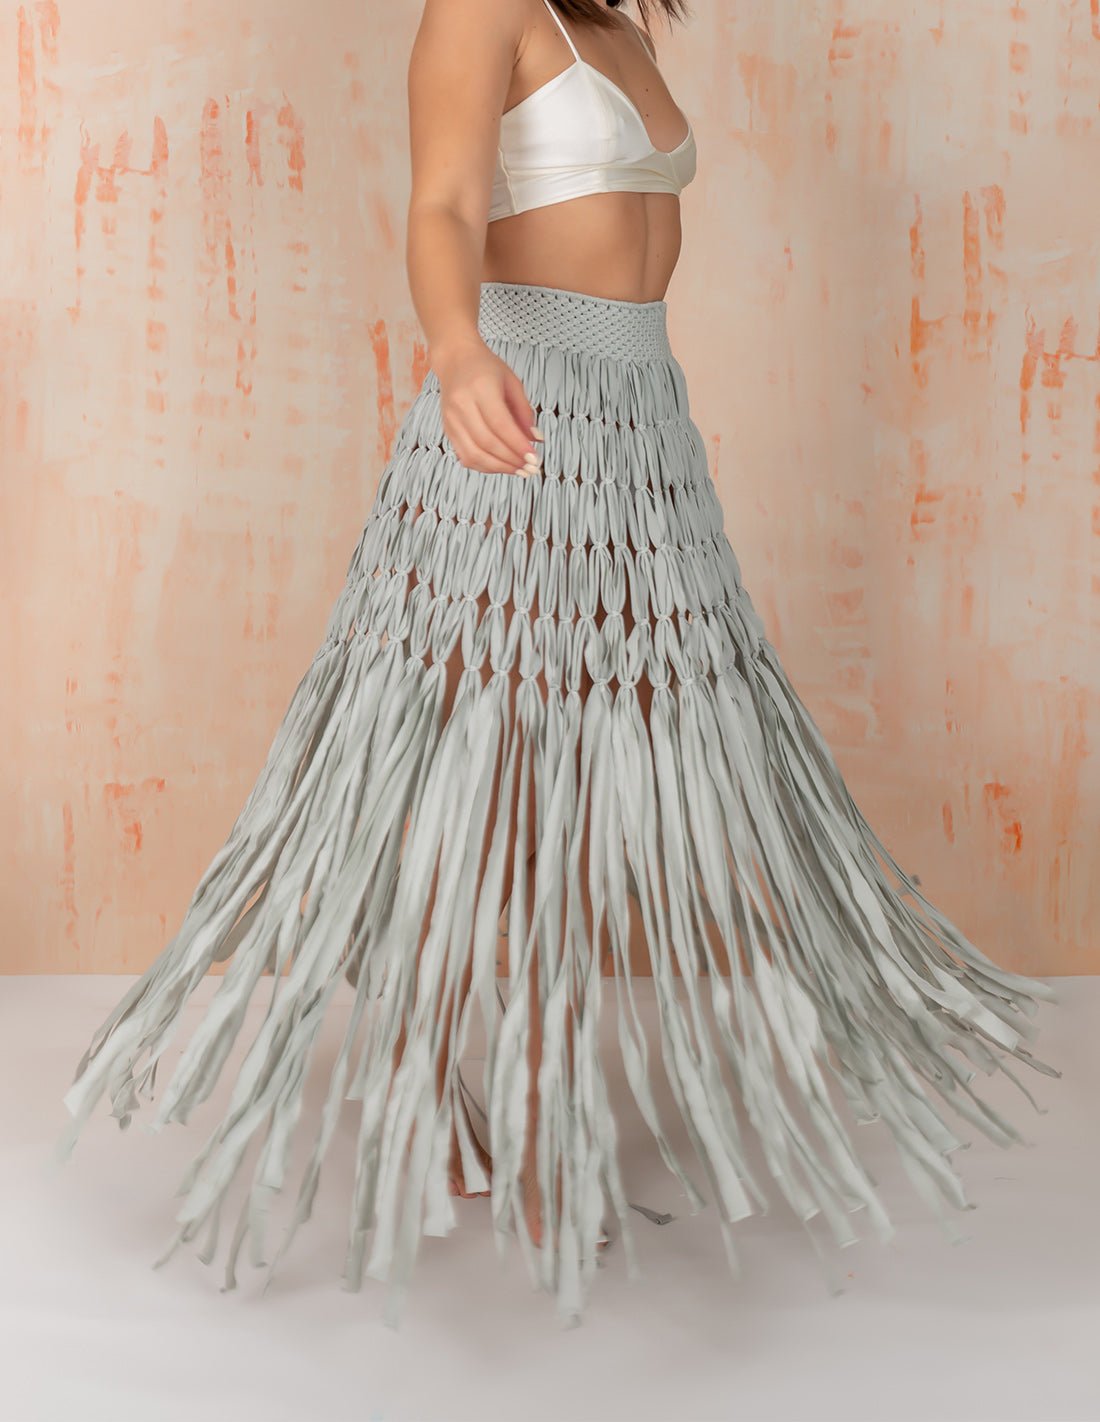 Chatteu Skirt Faded Greendusk - Skirt - Entreaguas Wearable Art